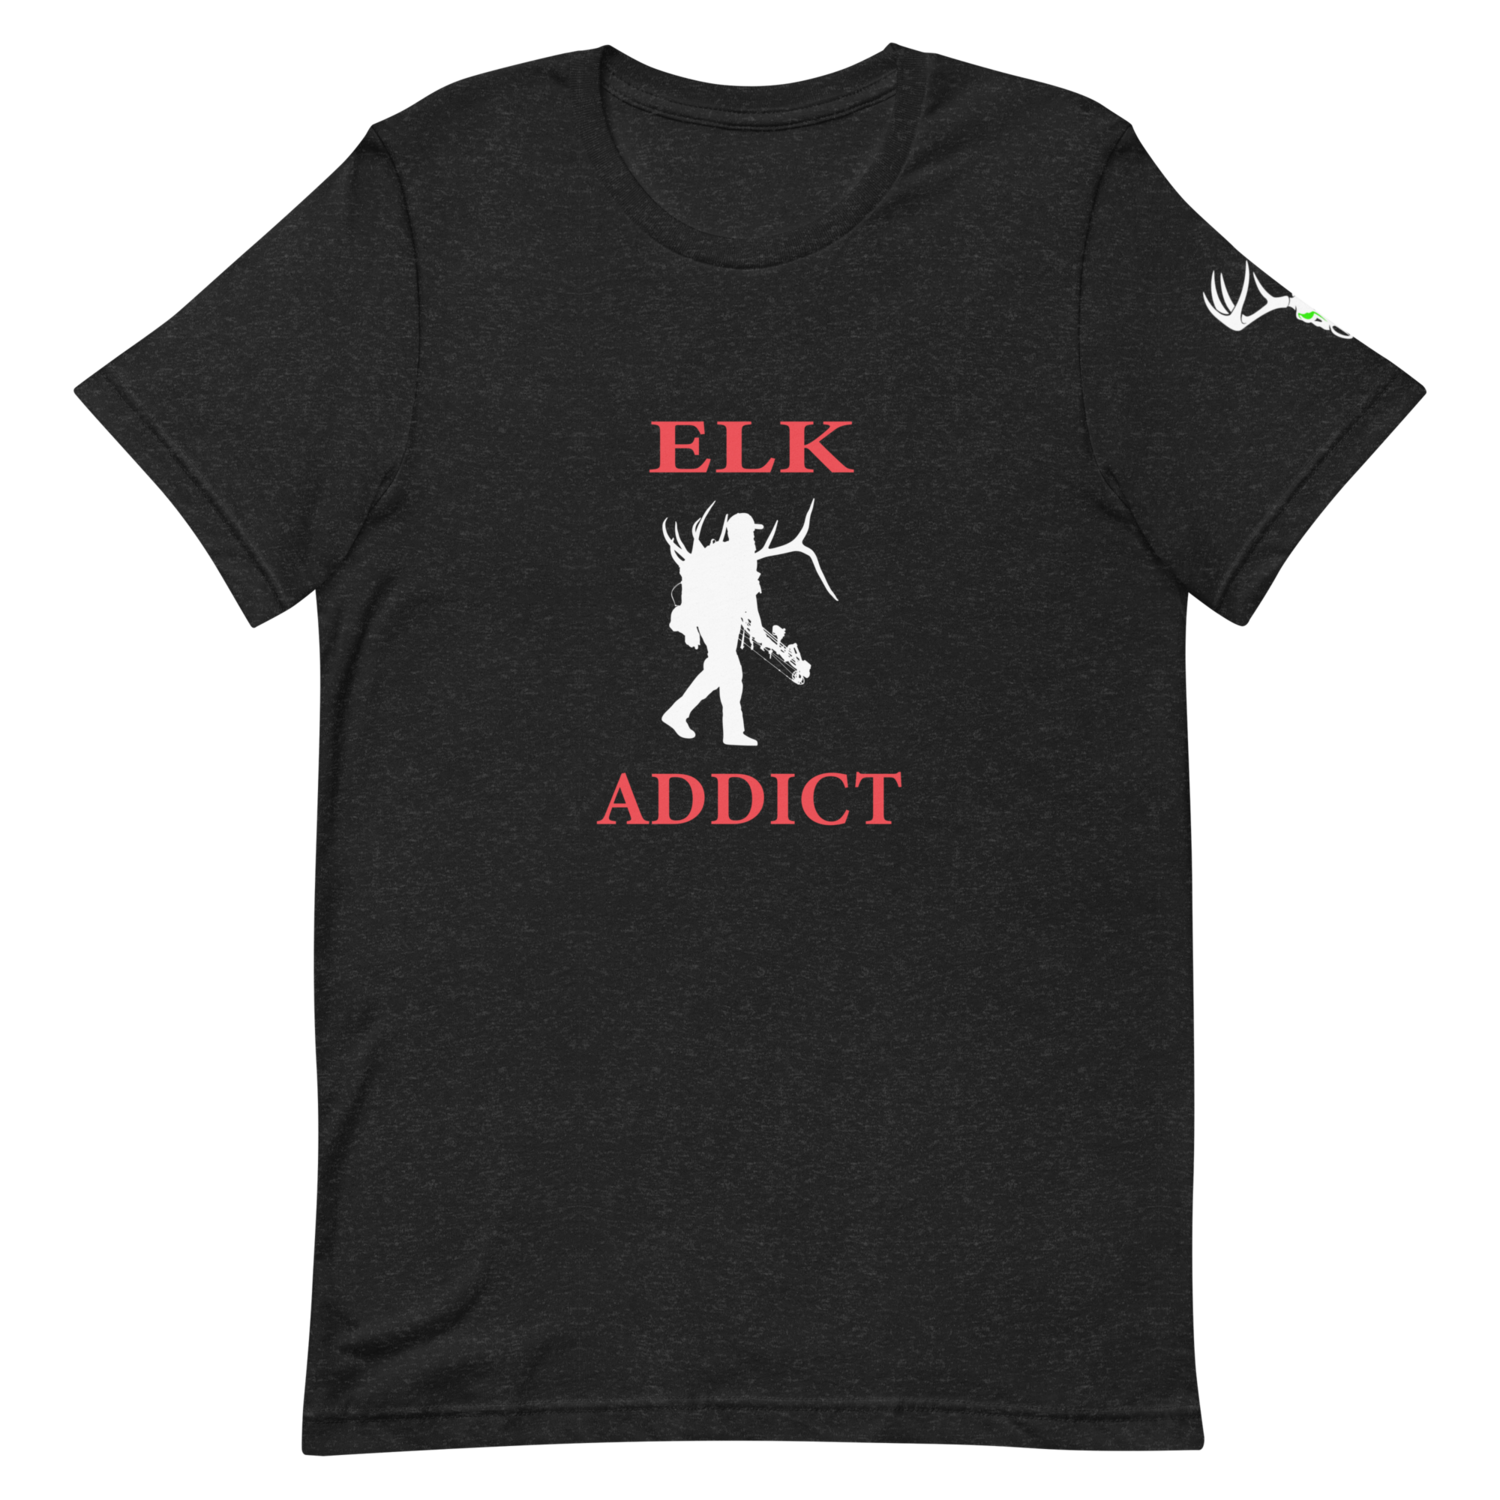 Elk Addict T-shirt